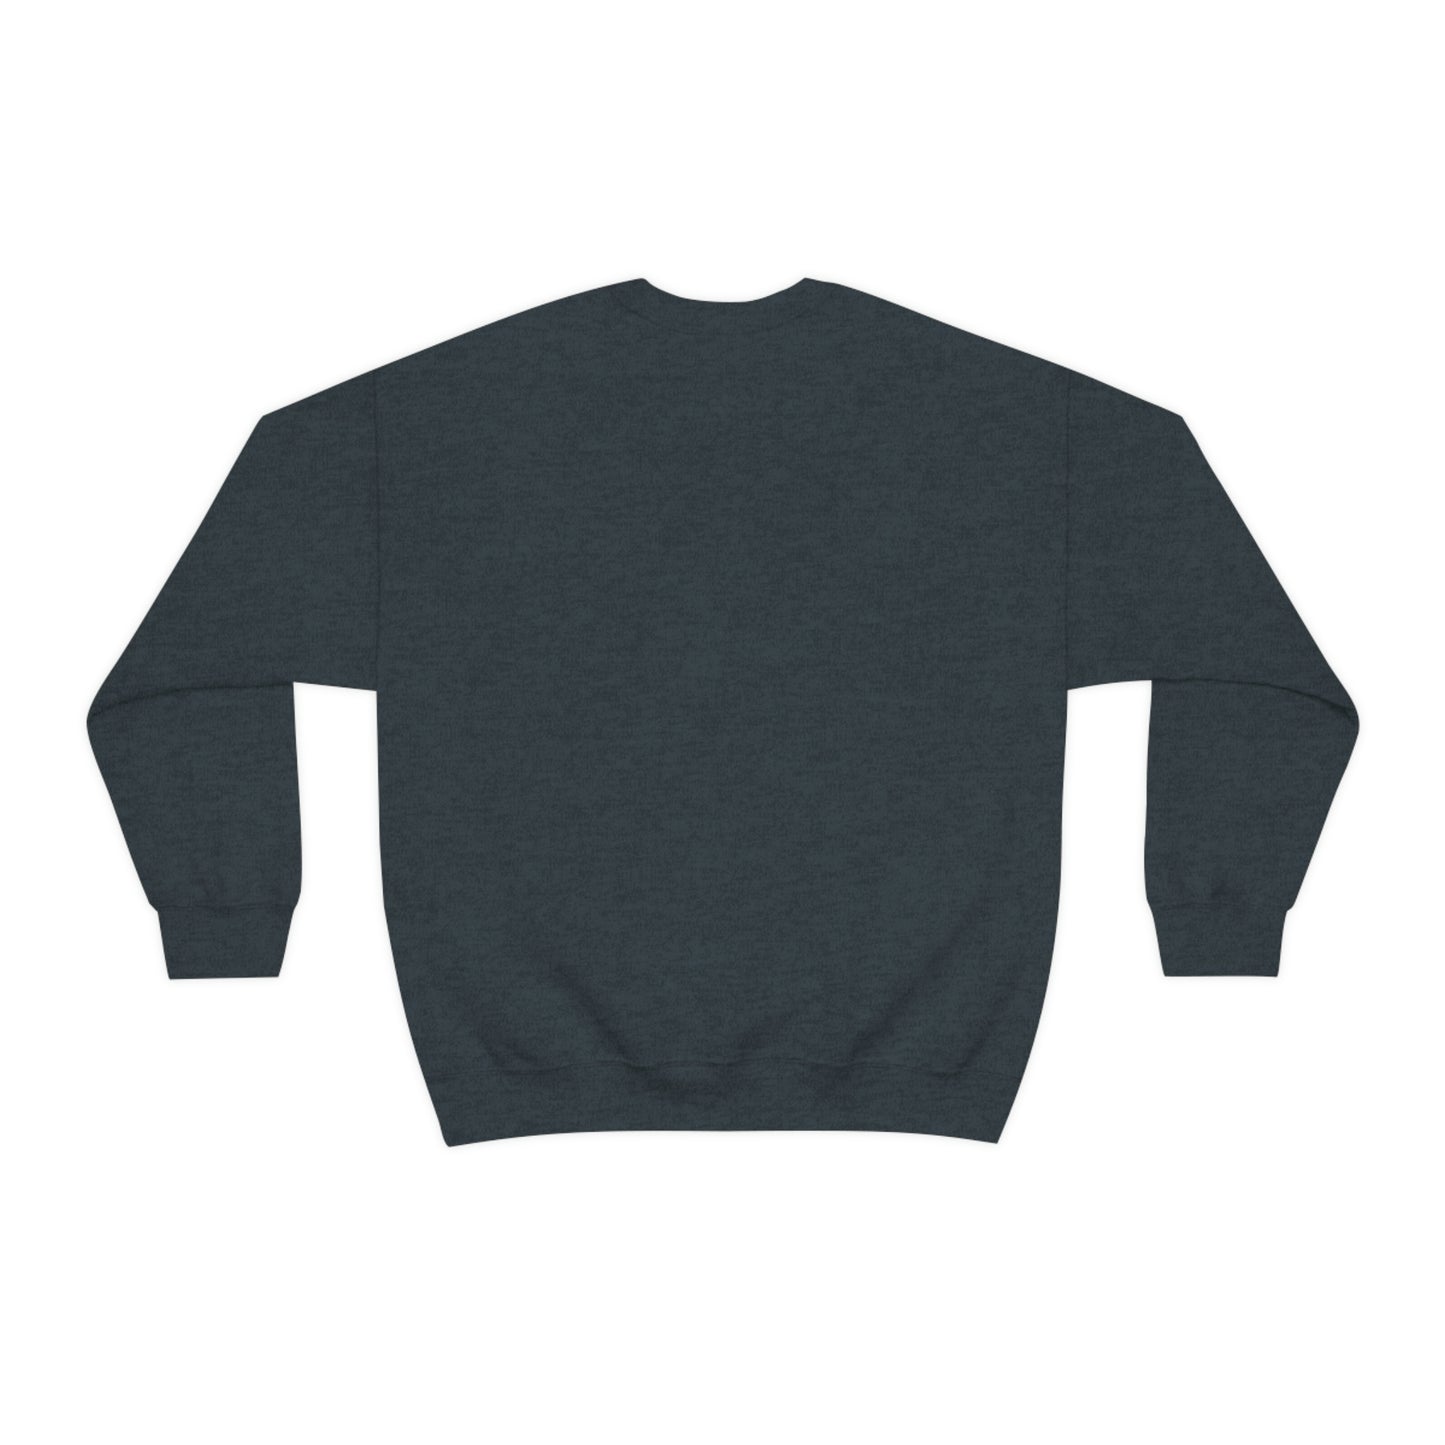 Chasing Light - Heavy Blend™ Crewneck Sweatshirt